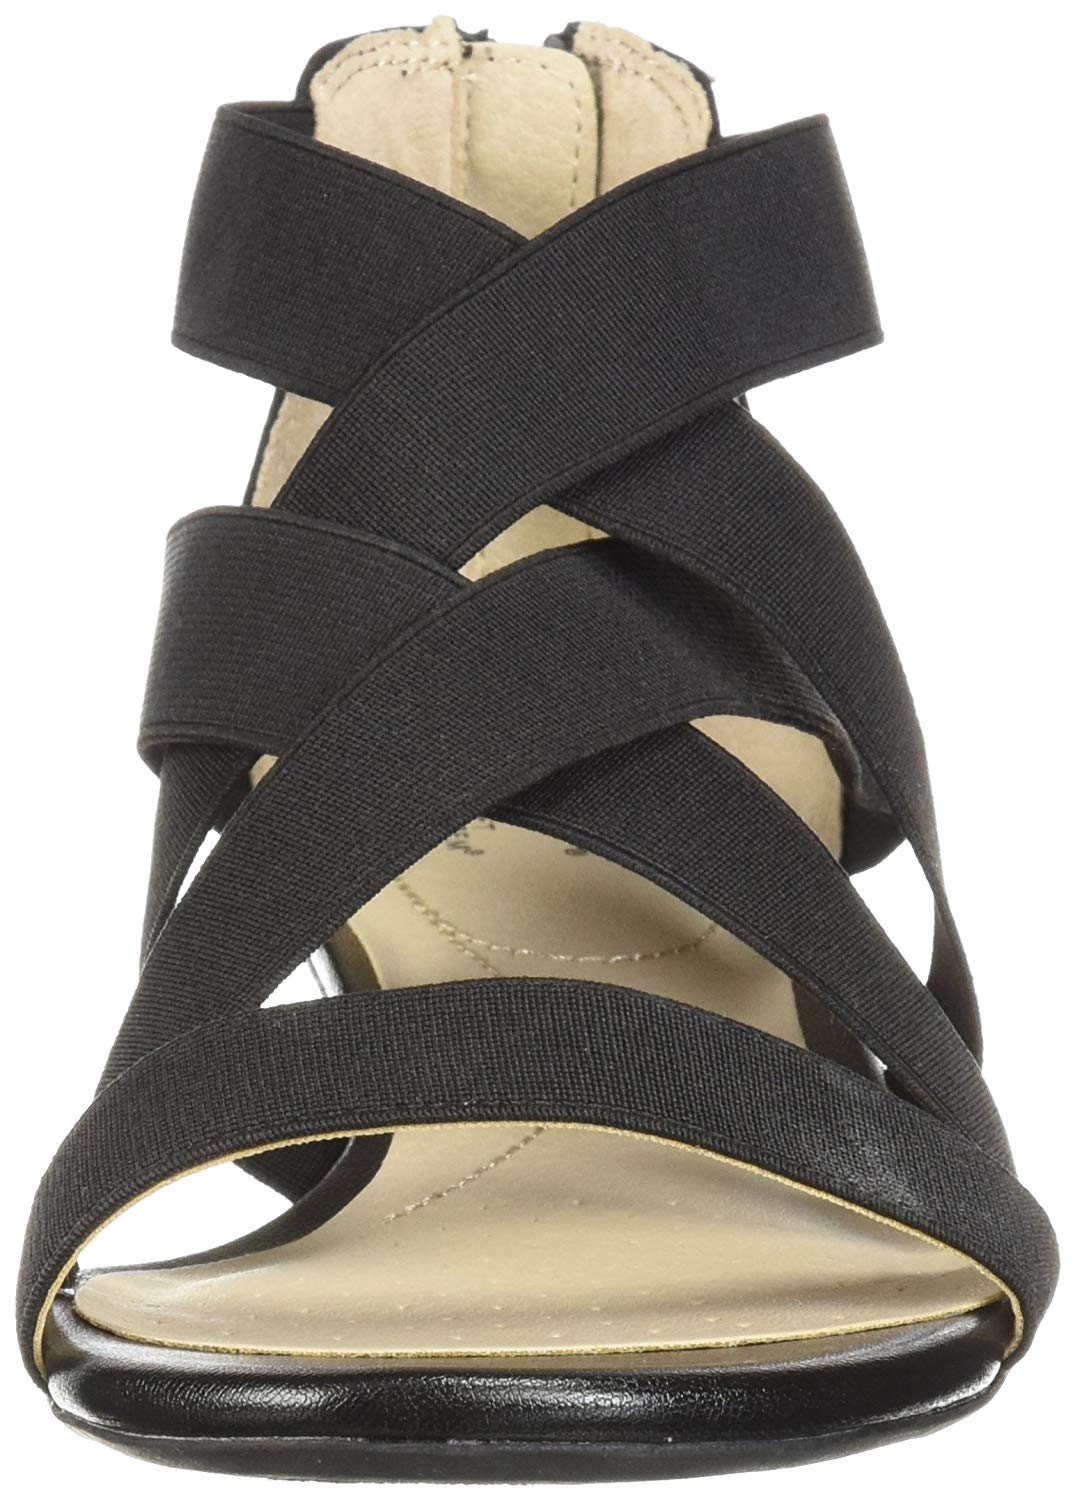 LifeStride Women's Yasemin Wedge Sandal, Black, Size 6.5 HnS7 eBay